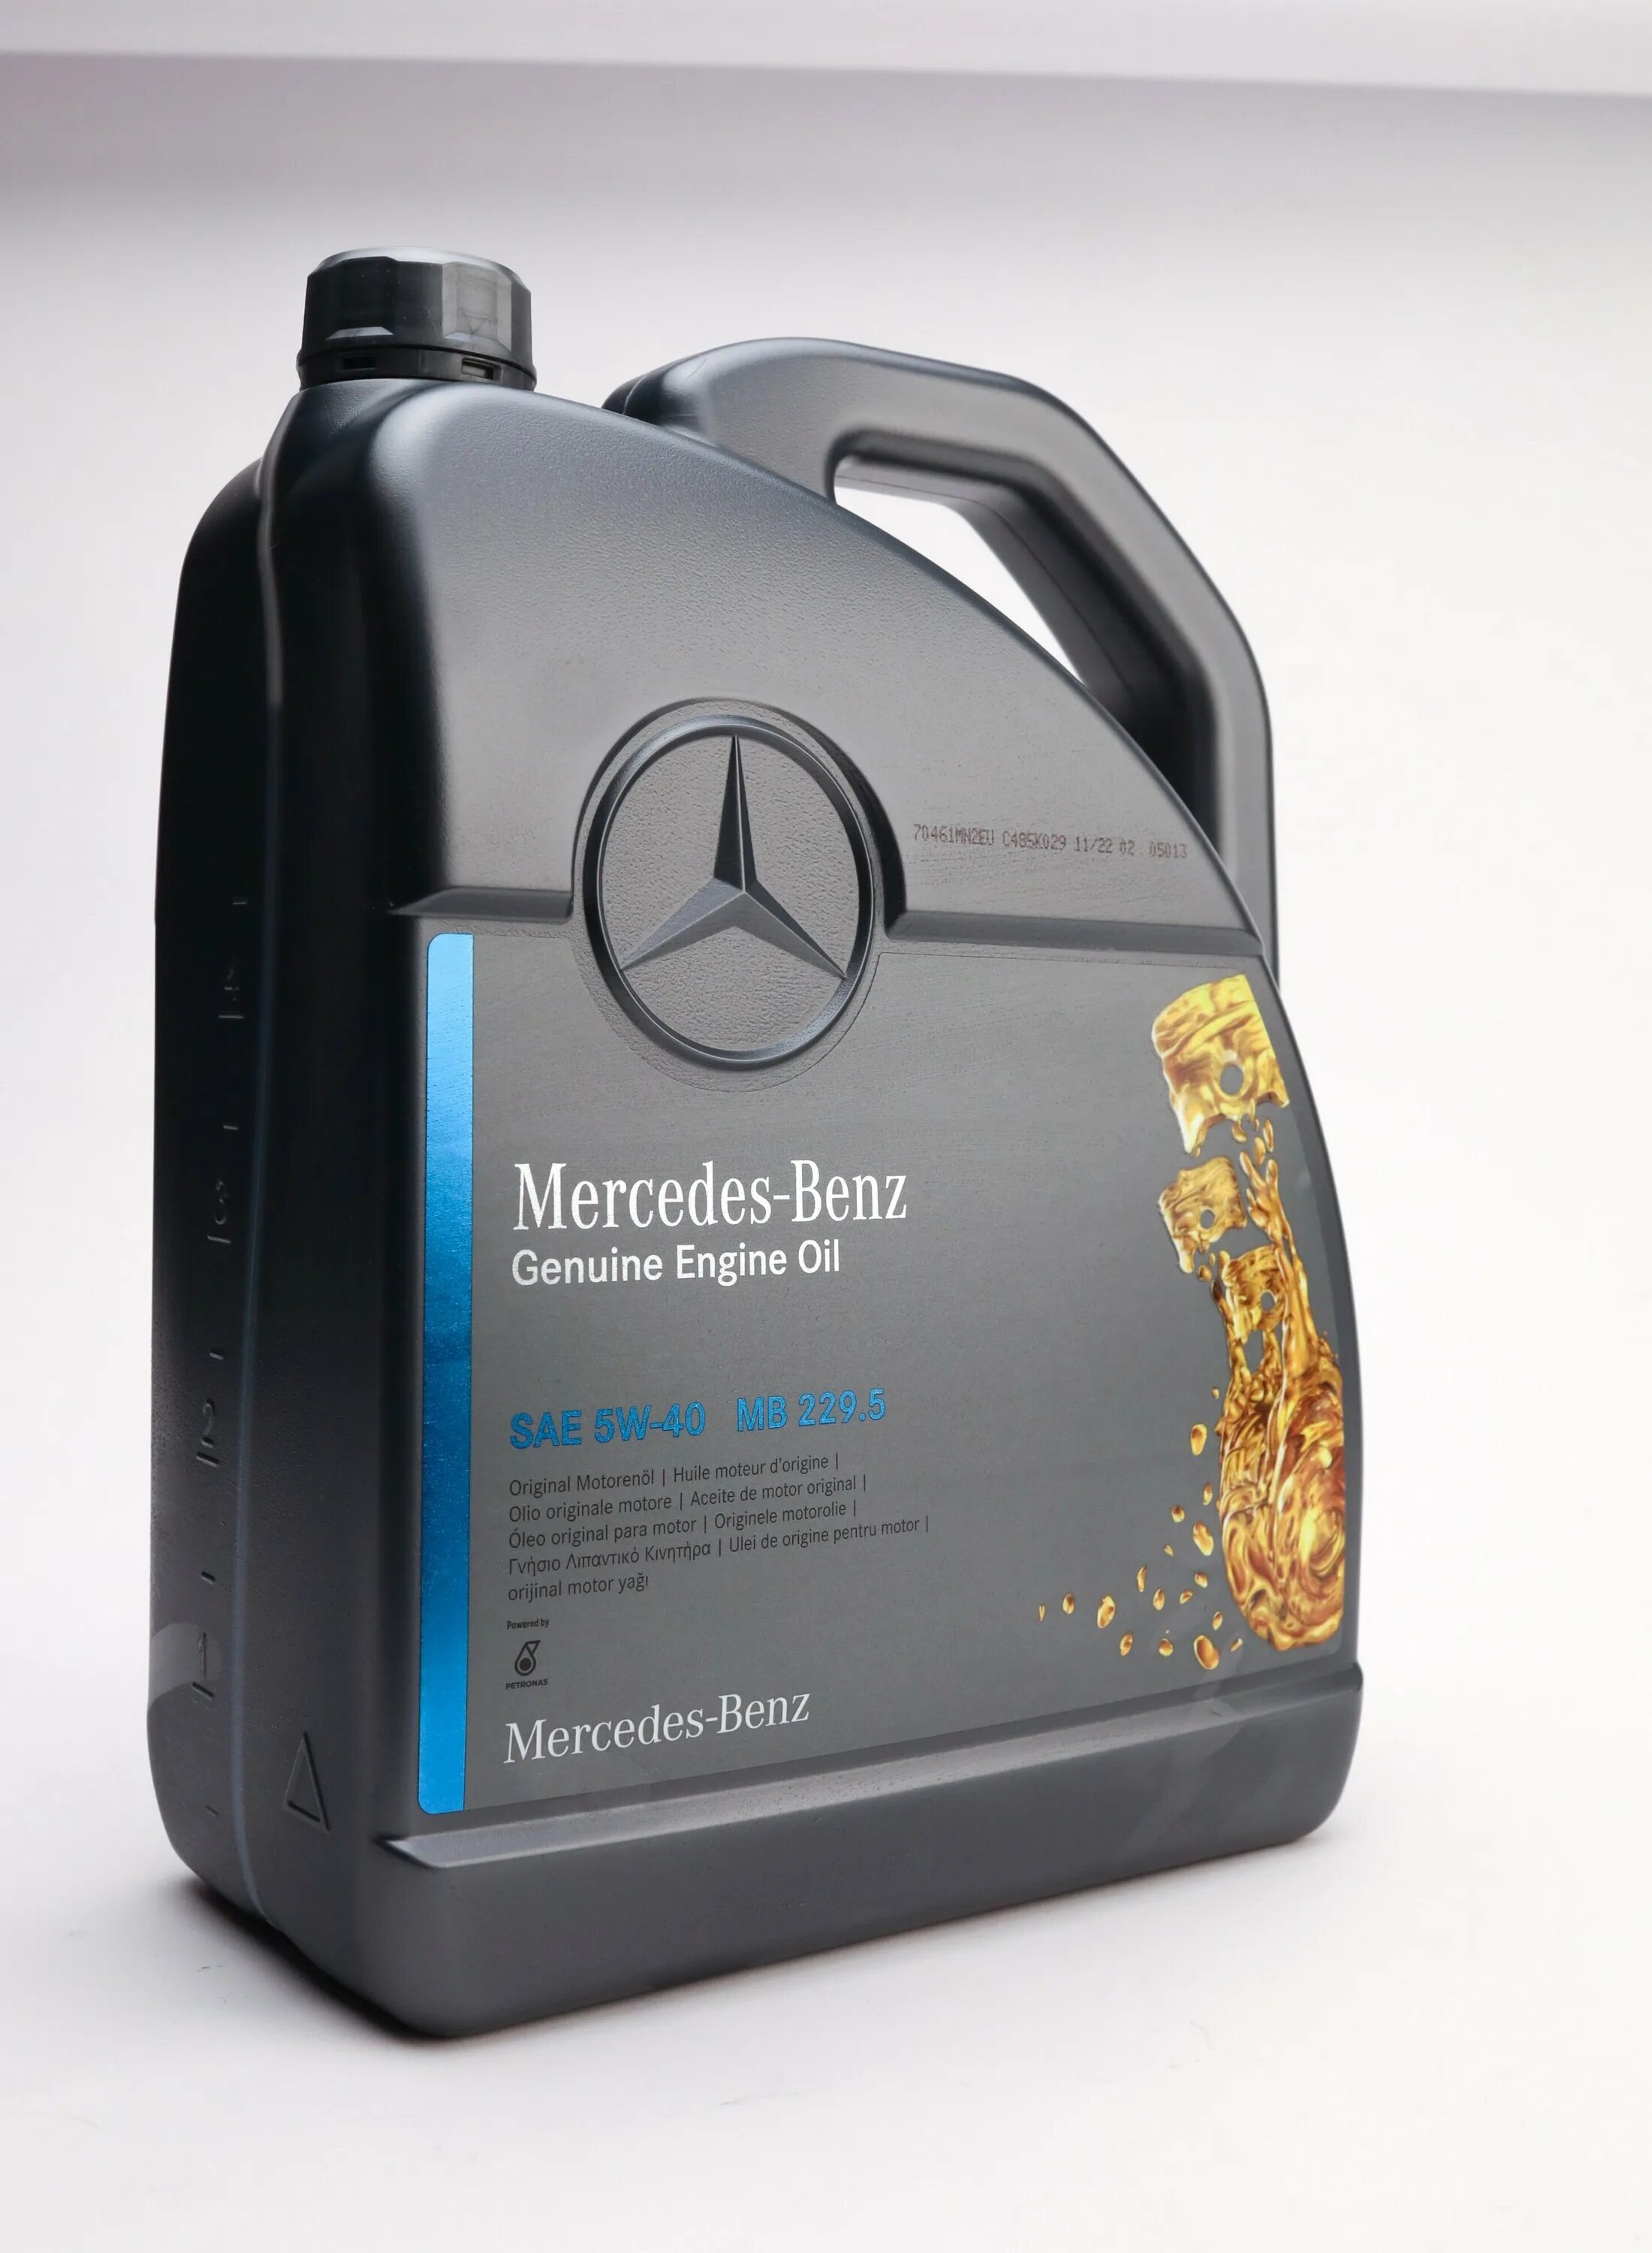 Масло мерседес артикул. Mercedes 5w40 МВ229.5. MB 229.5. 229.31 Масло Mercedes-Benz. Снизьте уровень моторного масла Мерседес.